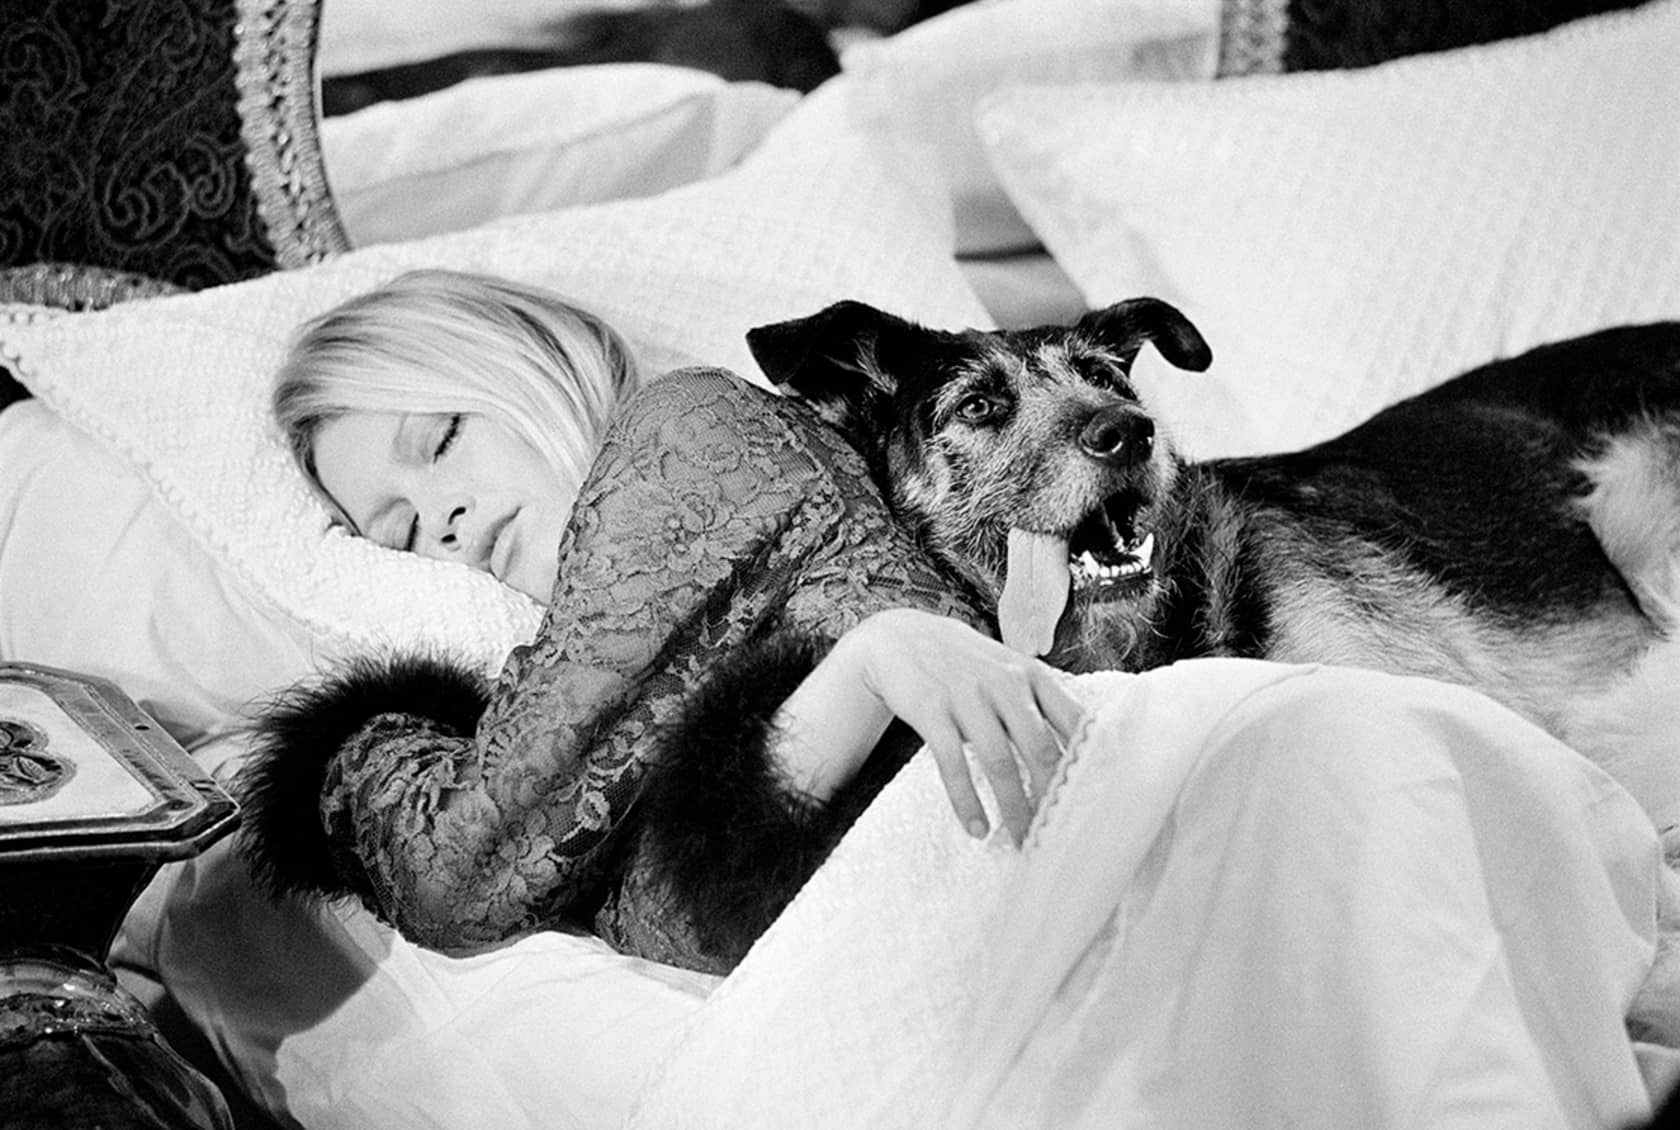 Terry O'Neill Brigitte Bardot with Dog Lifetime Edition Gelatin Silver Print